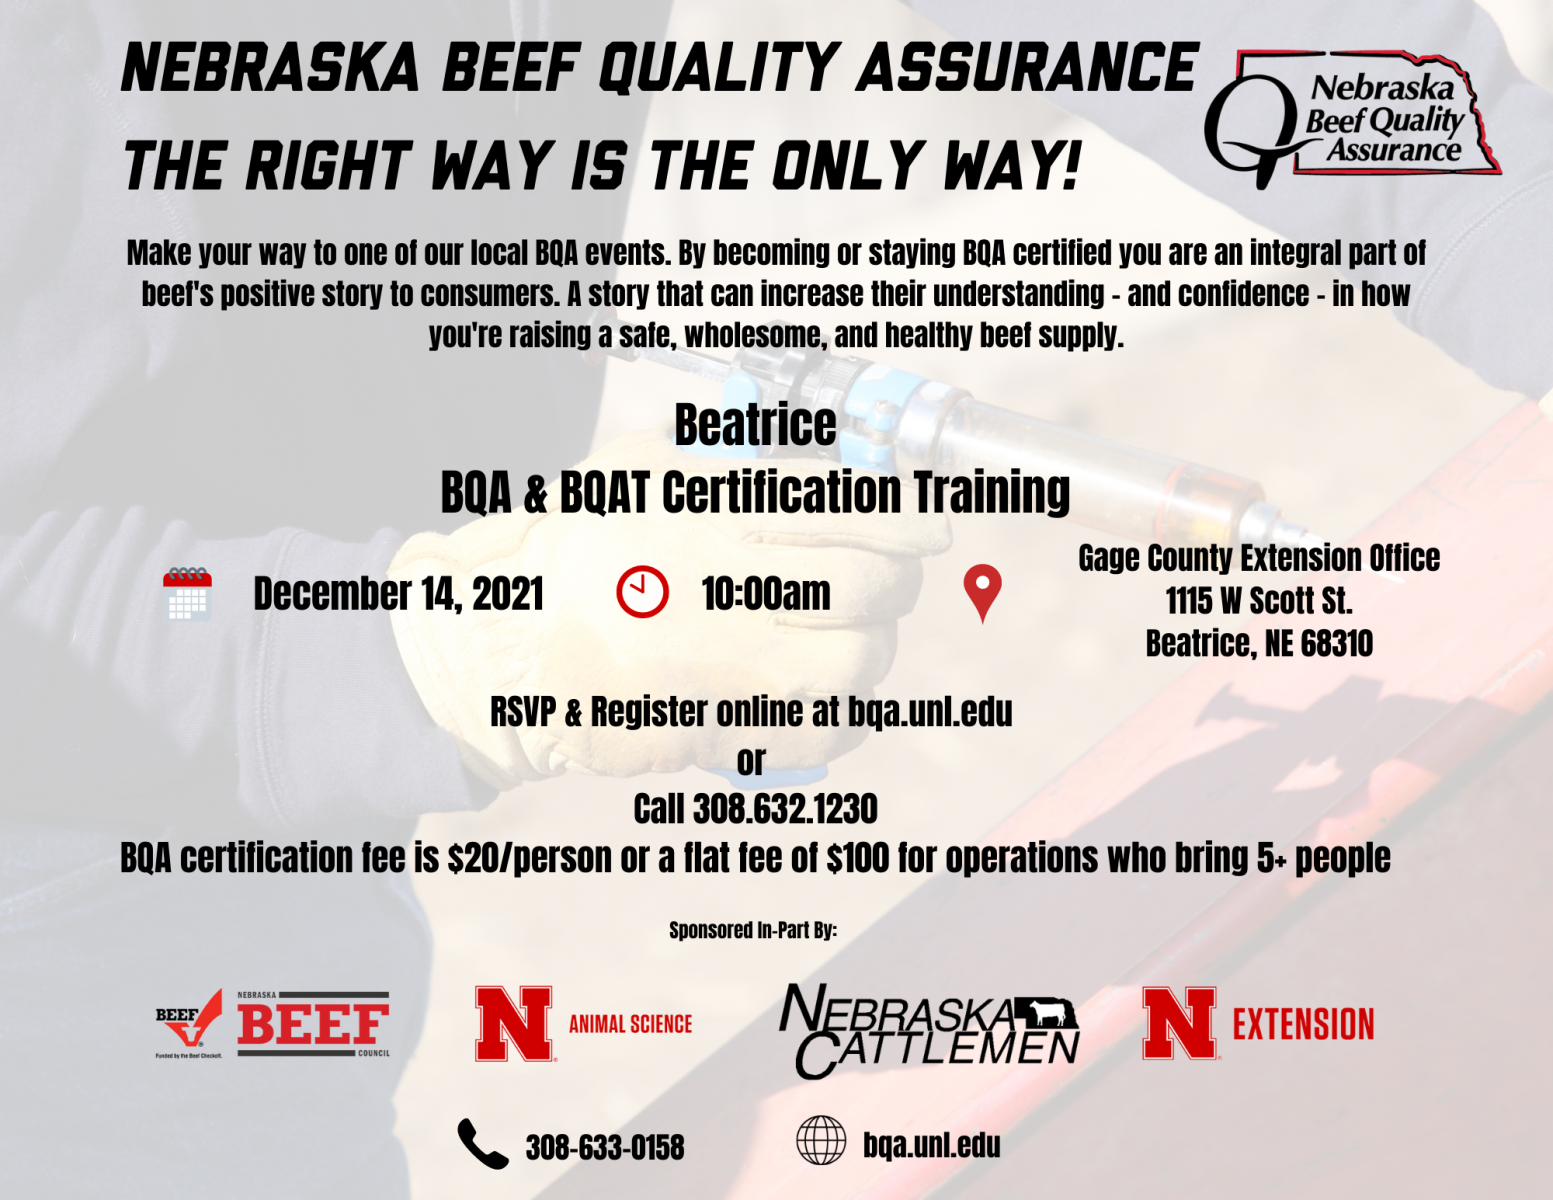 BQA & BQAT Certification Training. Register at bqa.unl.edu